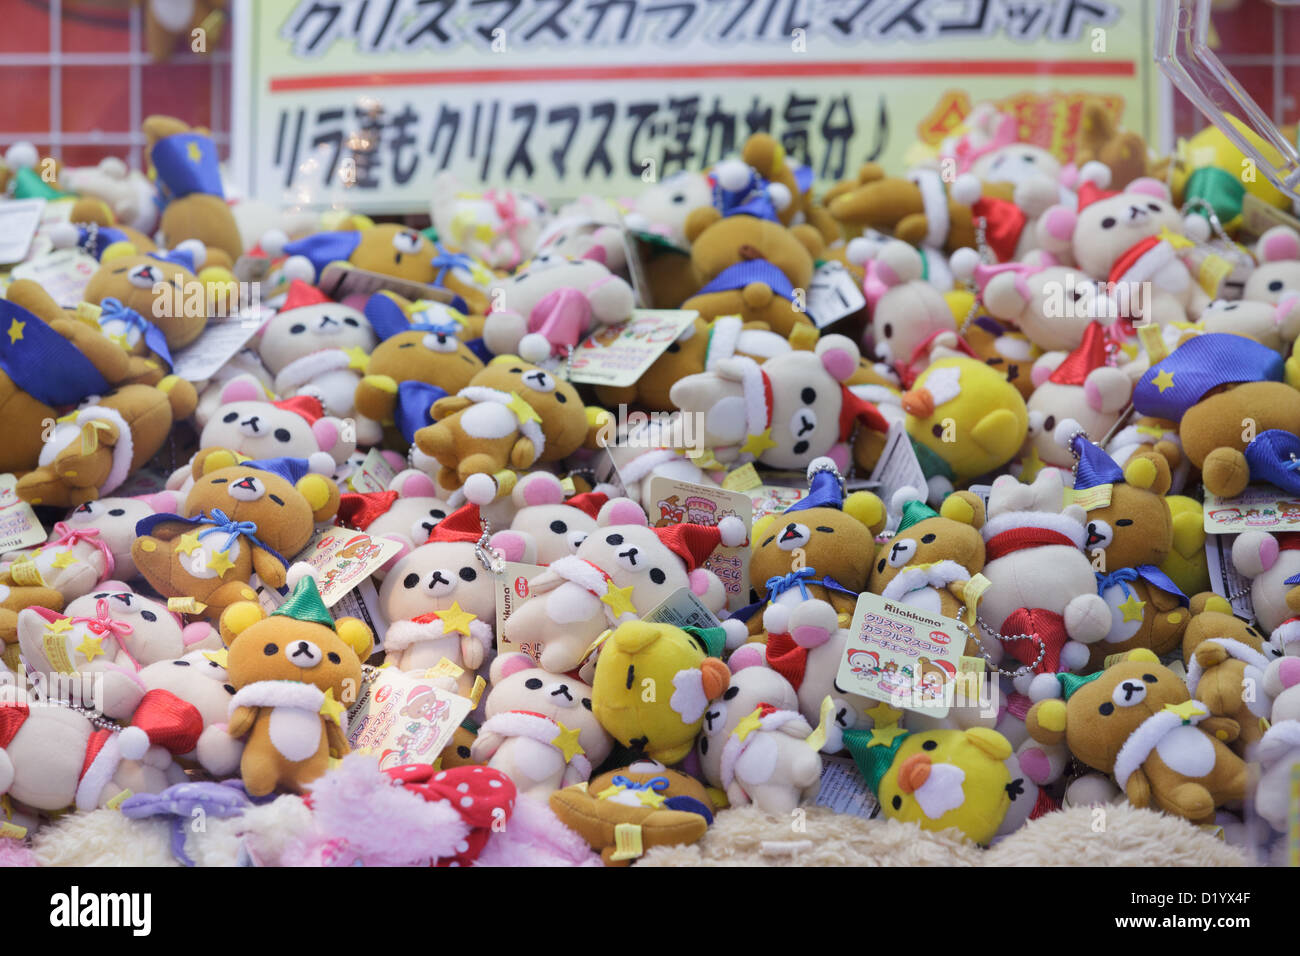 Pile Of Cuddly Toys In Japanese Store Osaka Japan Stock Photo Alamy